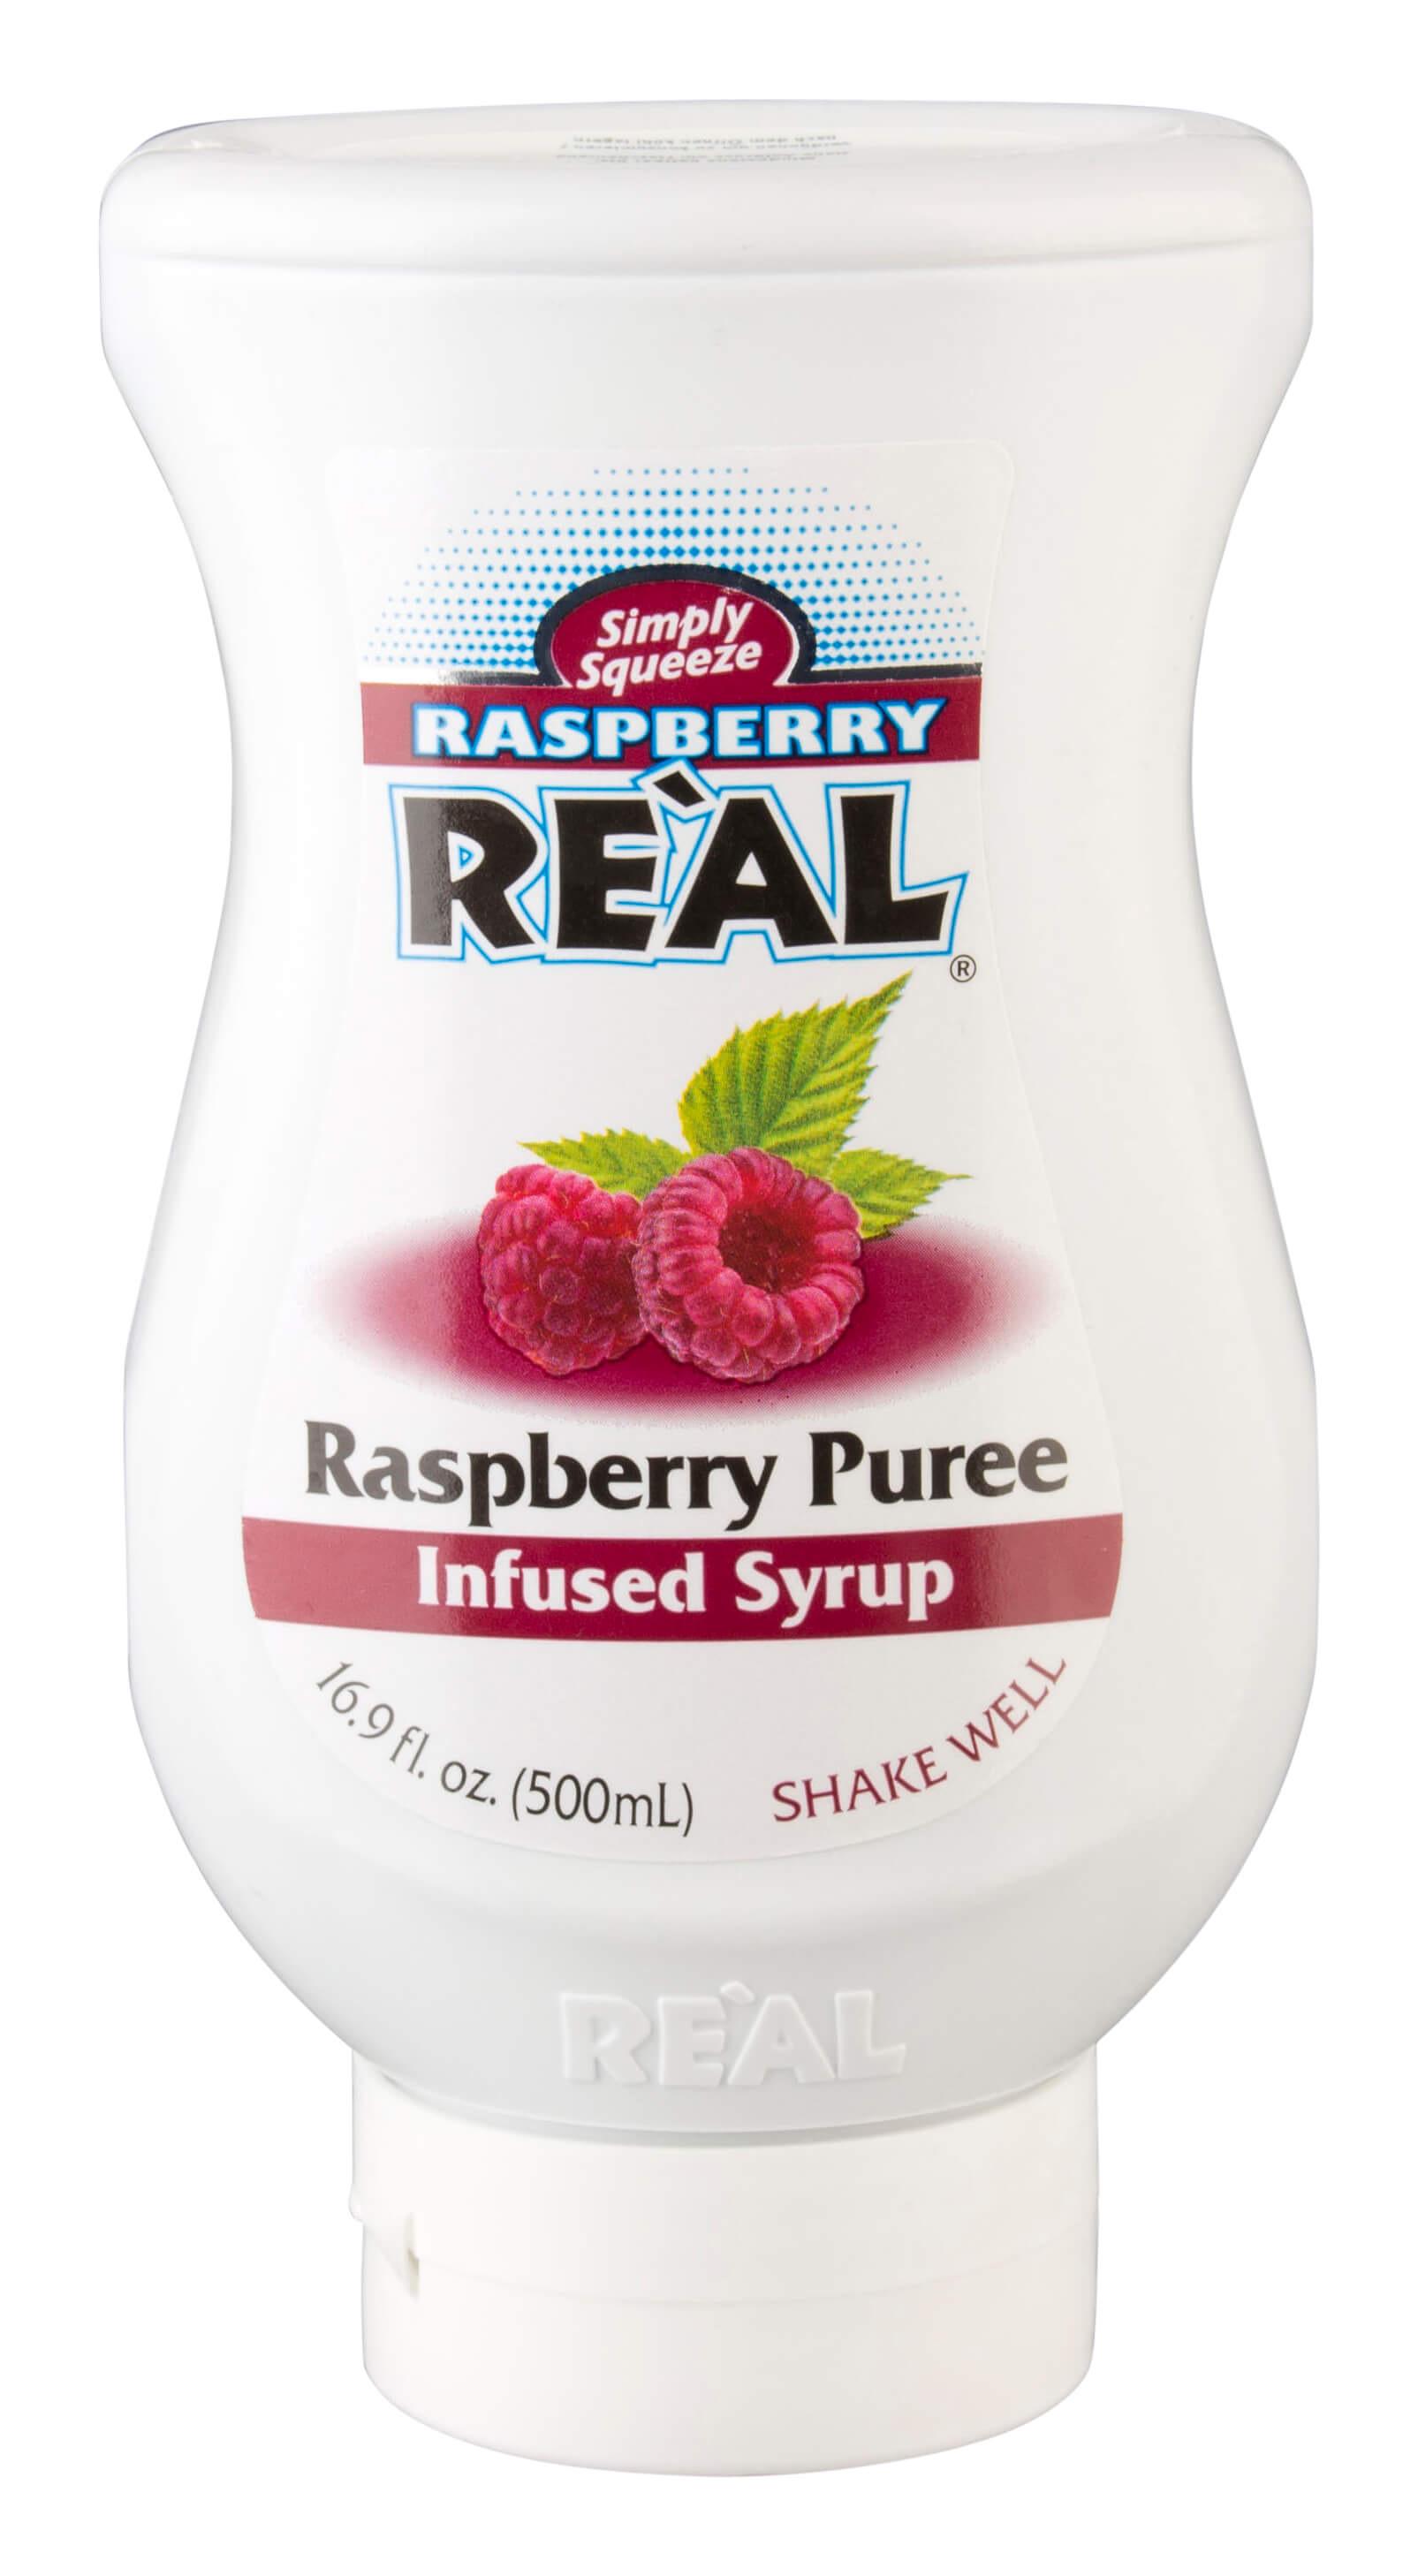 Raspberry Real - raspberry syrup (500ml)